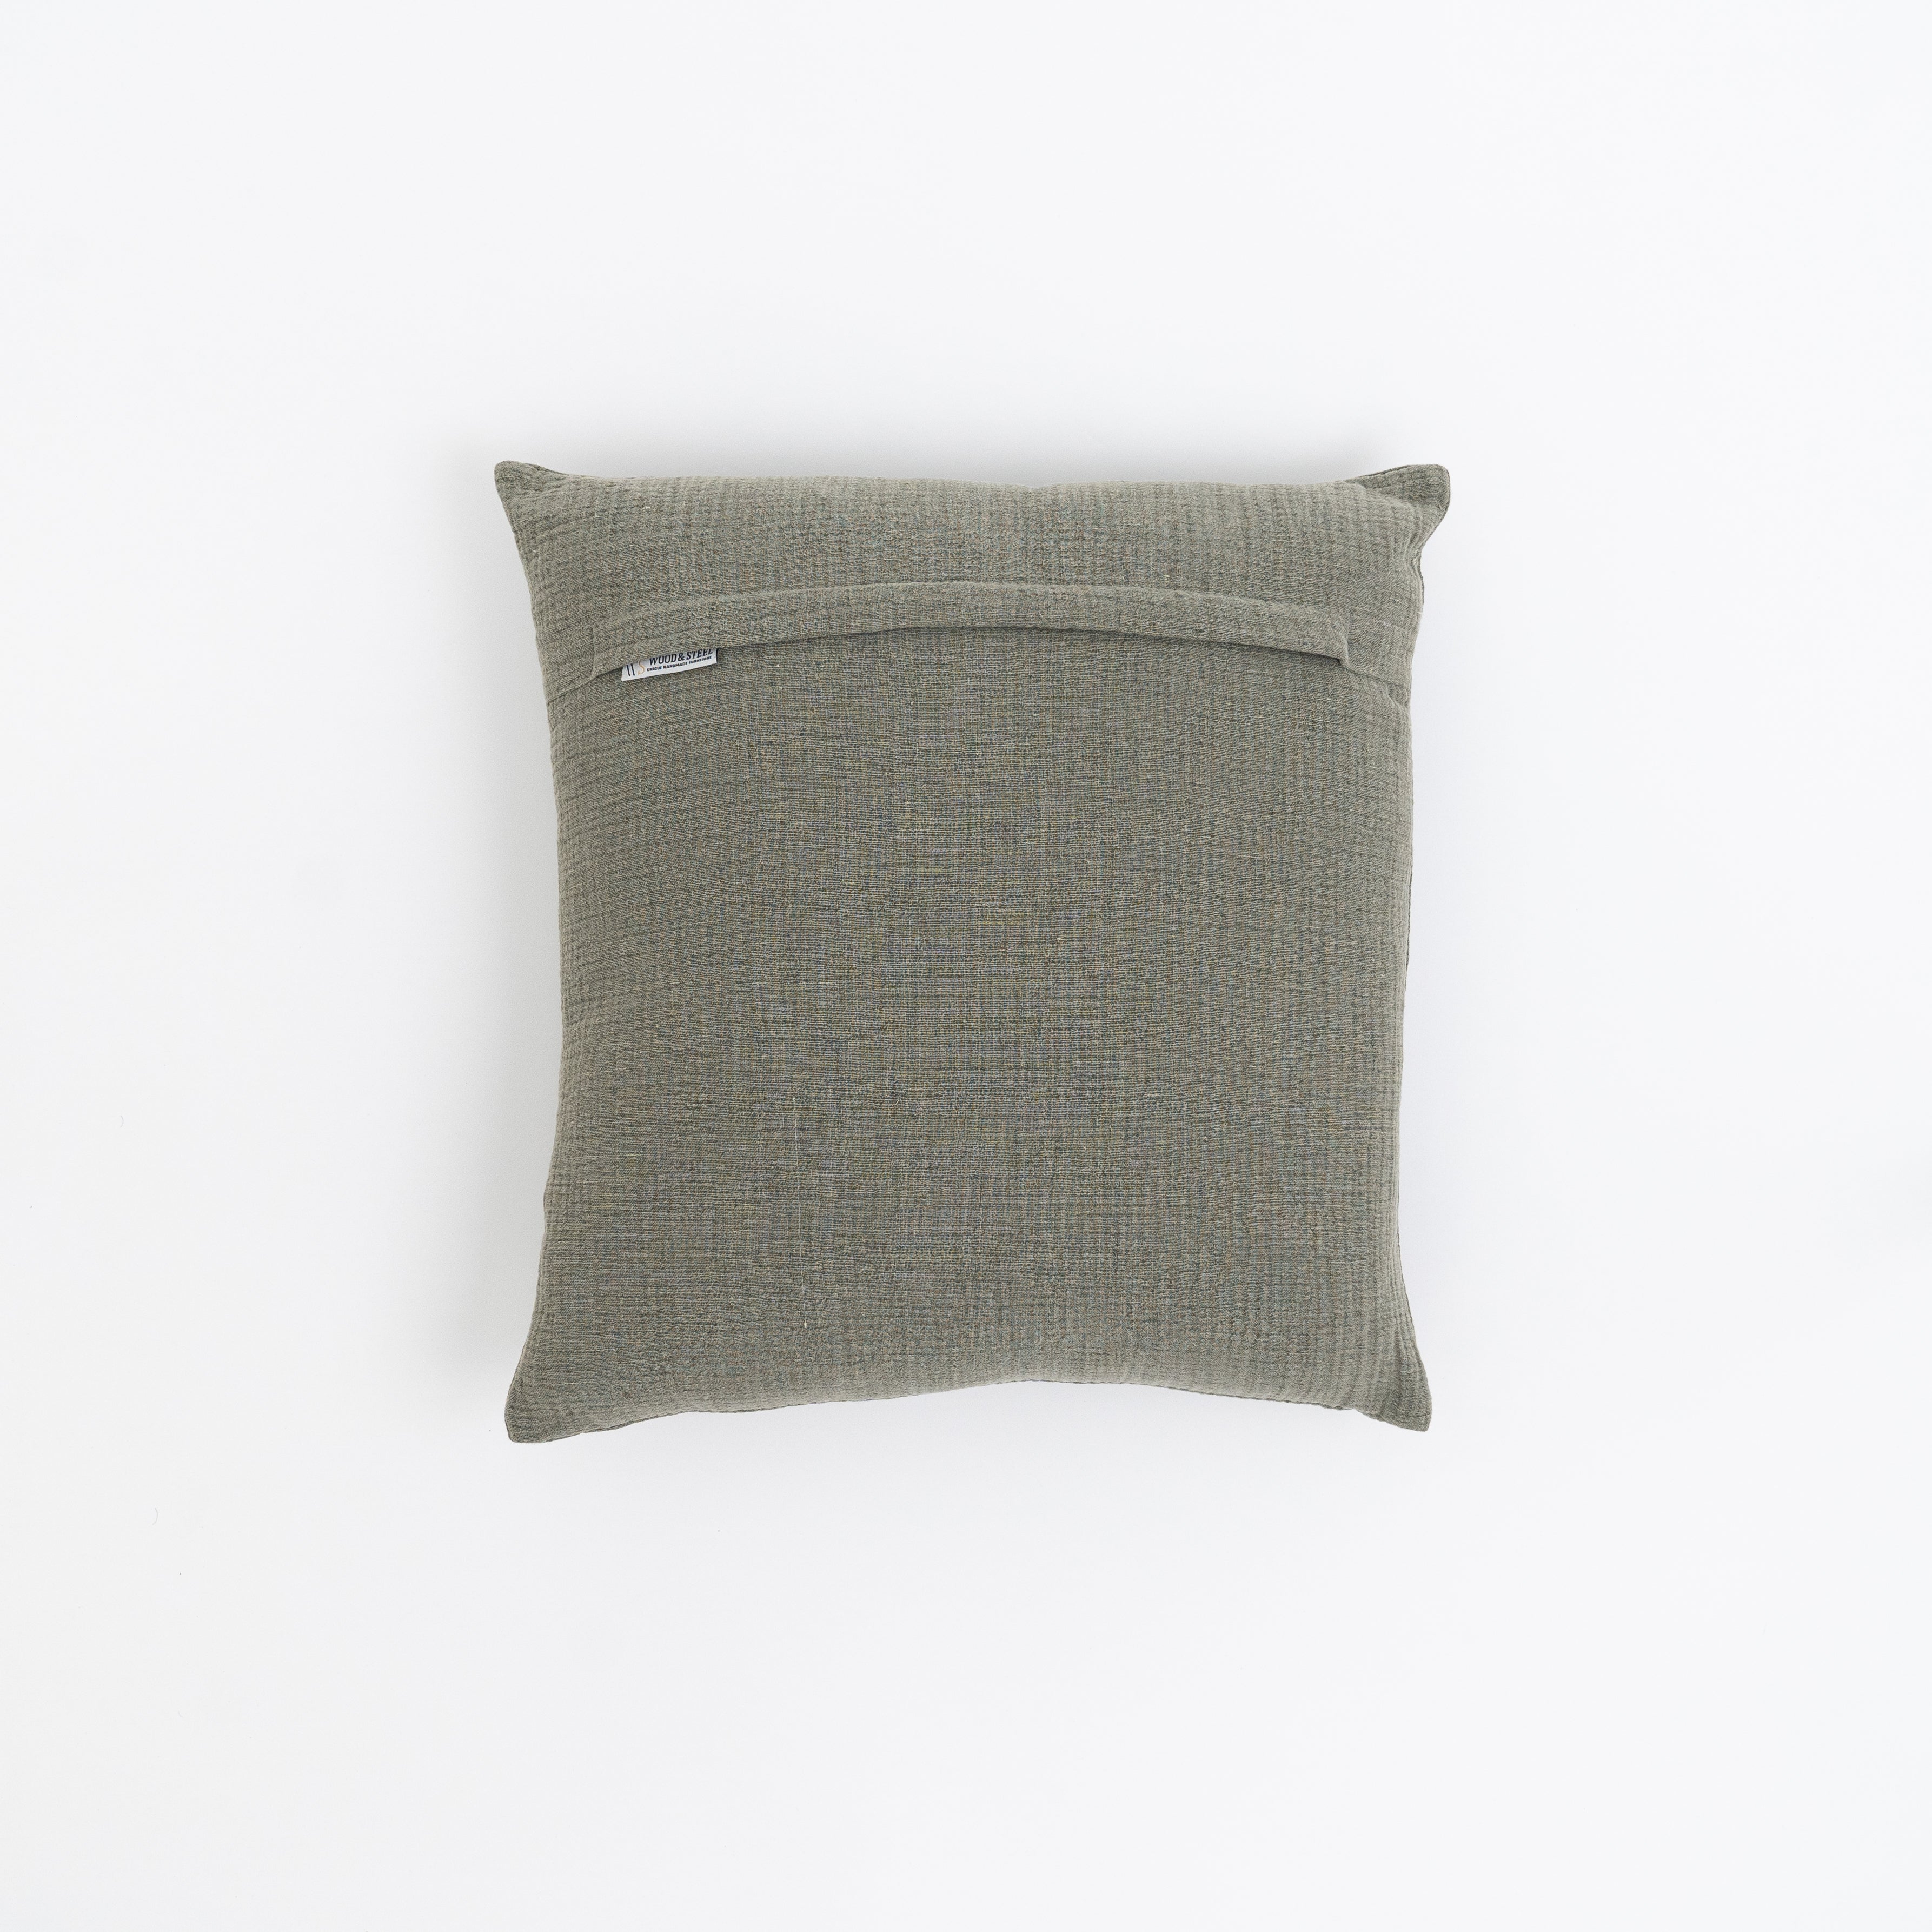 Cushion Cover Dark Grey 45 x45cm (8201 #9 )  - WS Living - UAE - Cushions Wood and steel Furnitures - Dubai